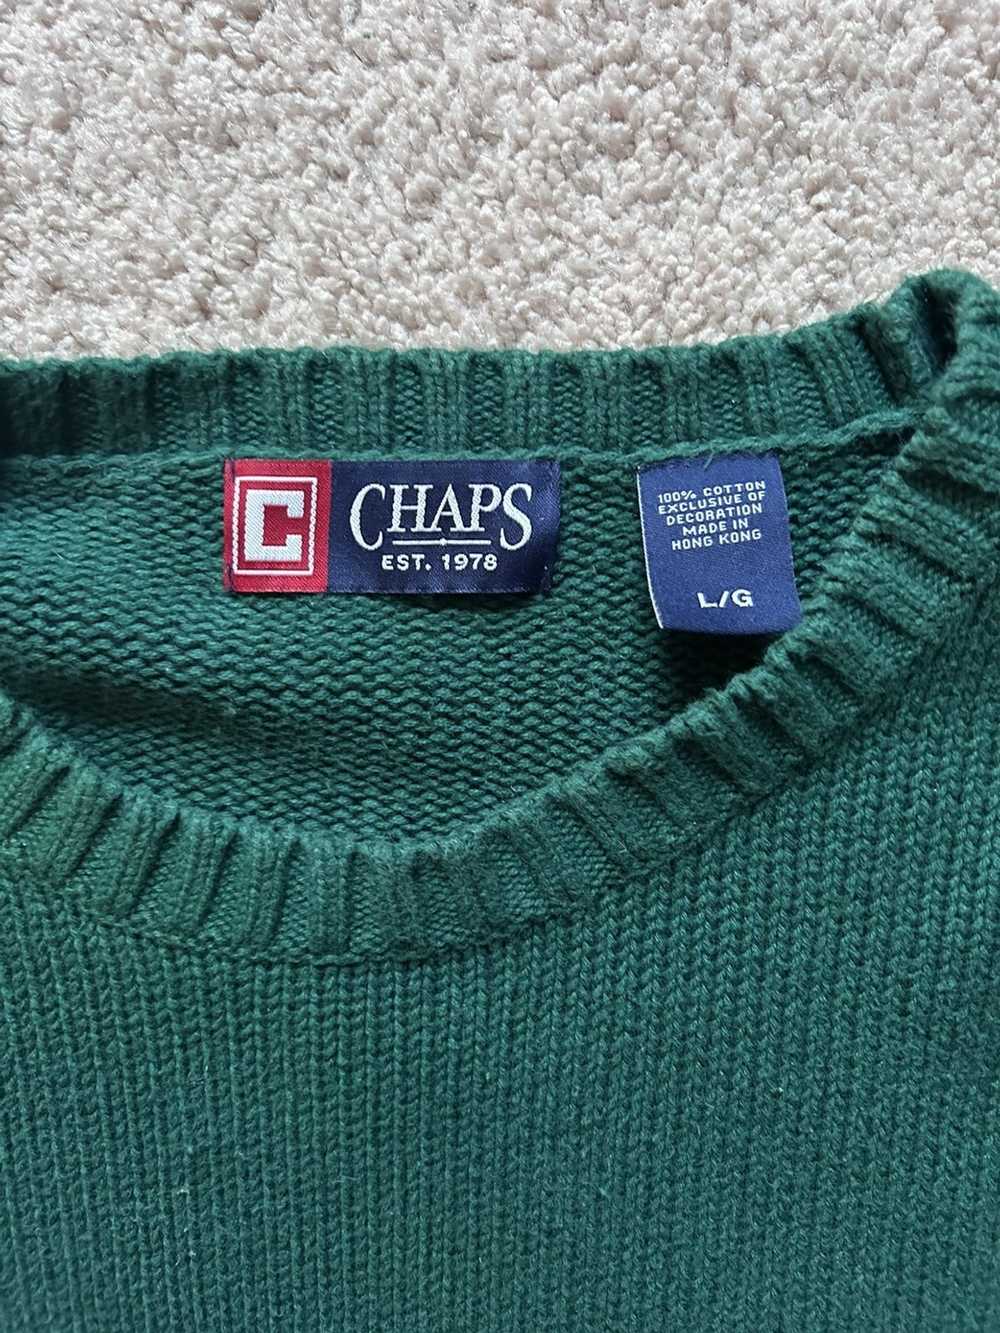 Chaps × Vintage Chaps Sweater - image 3